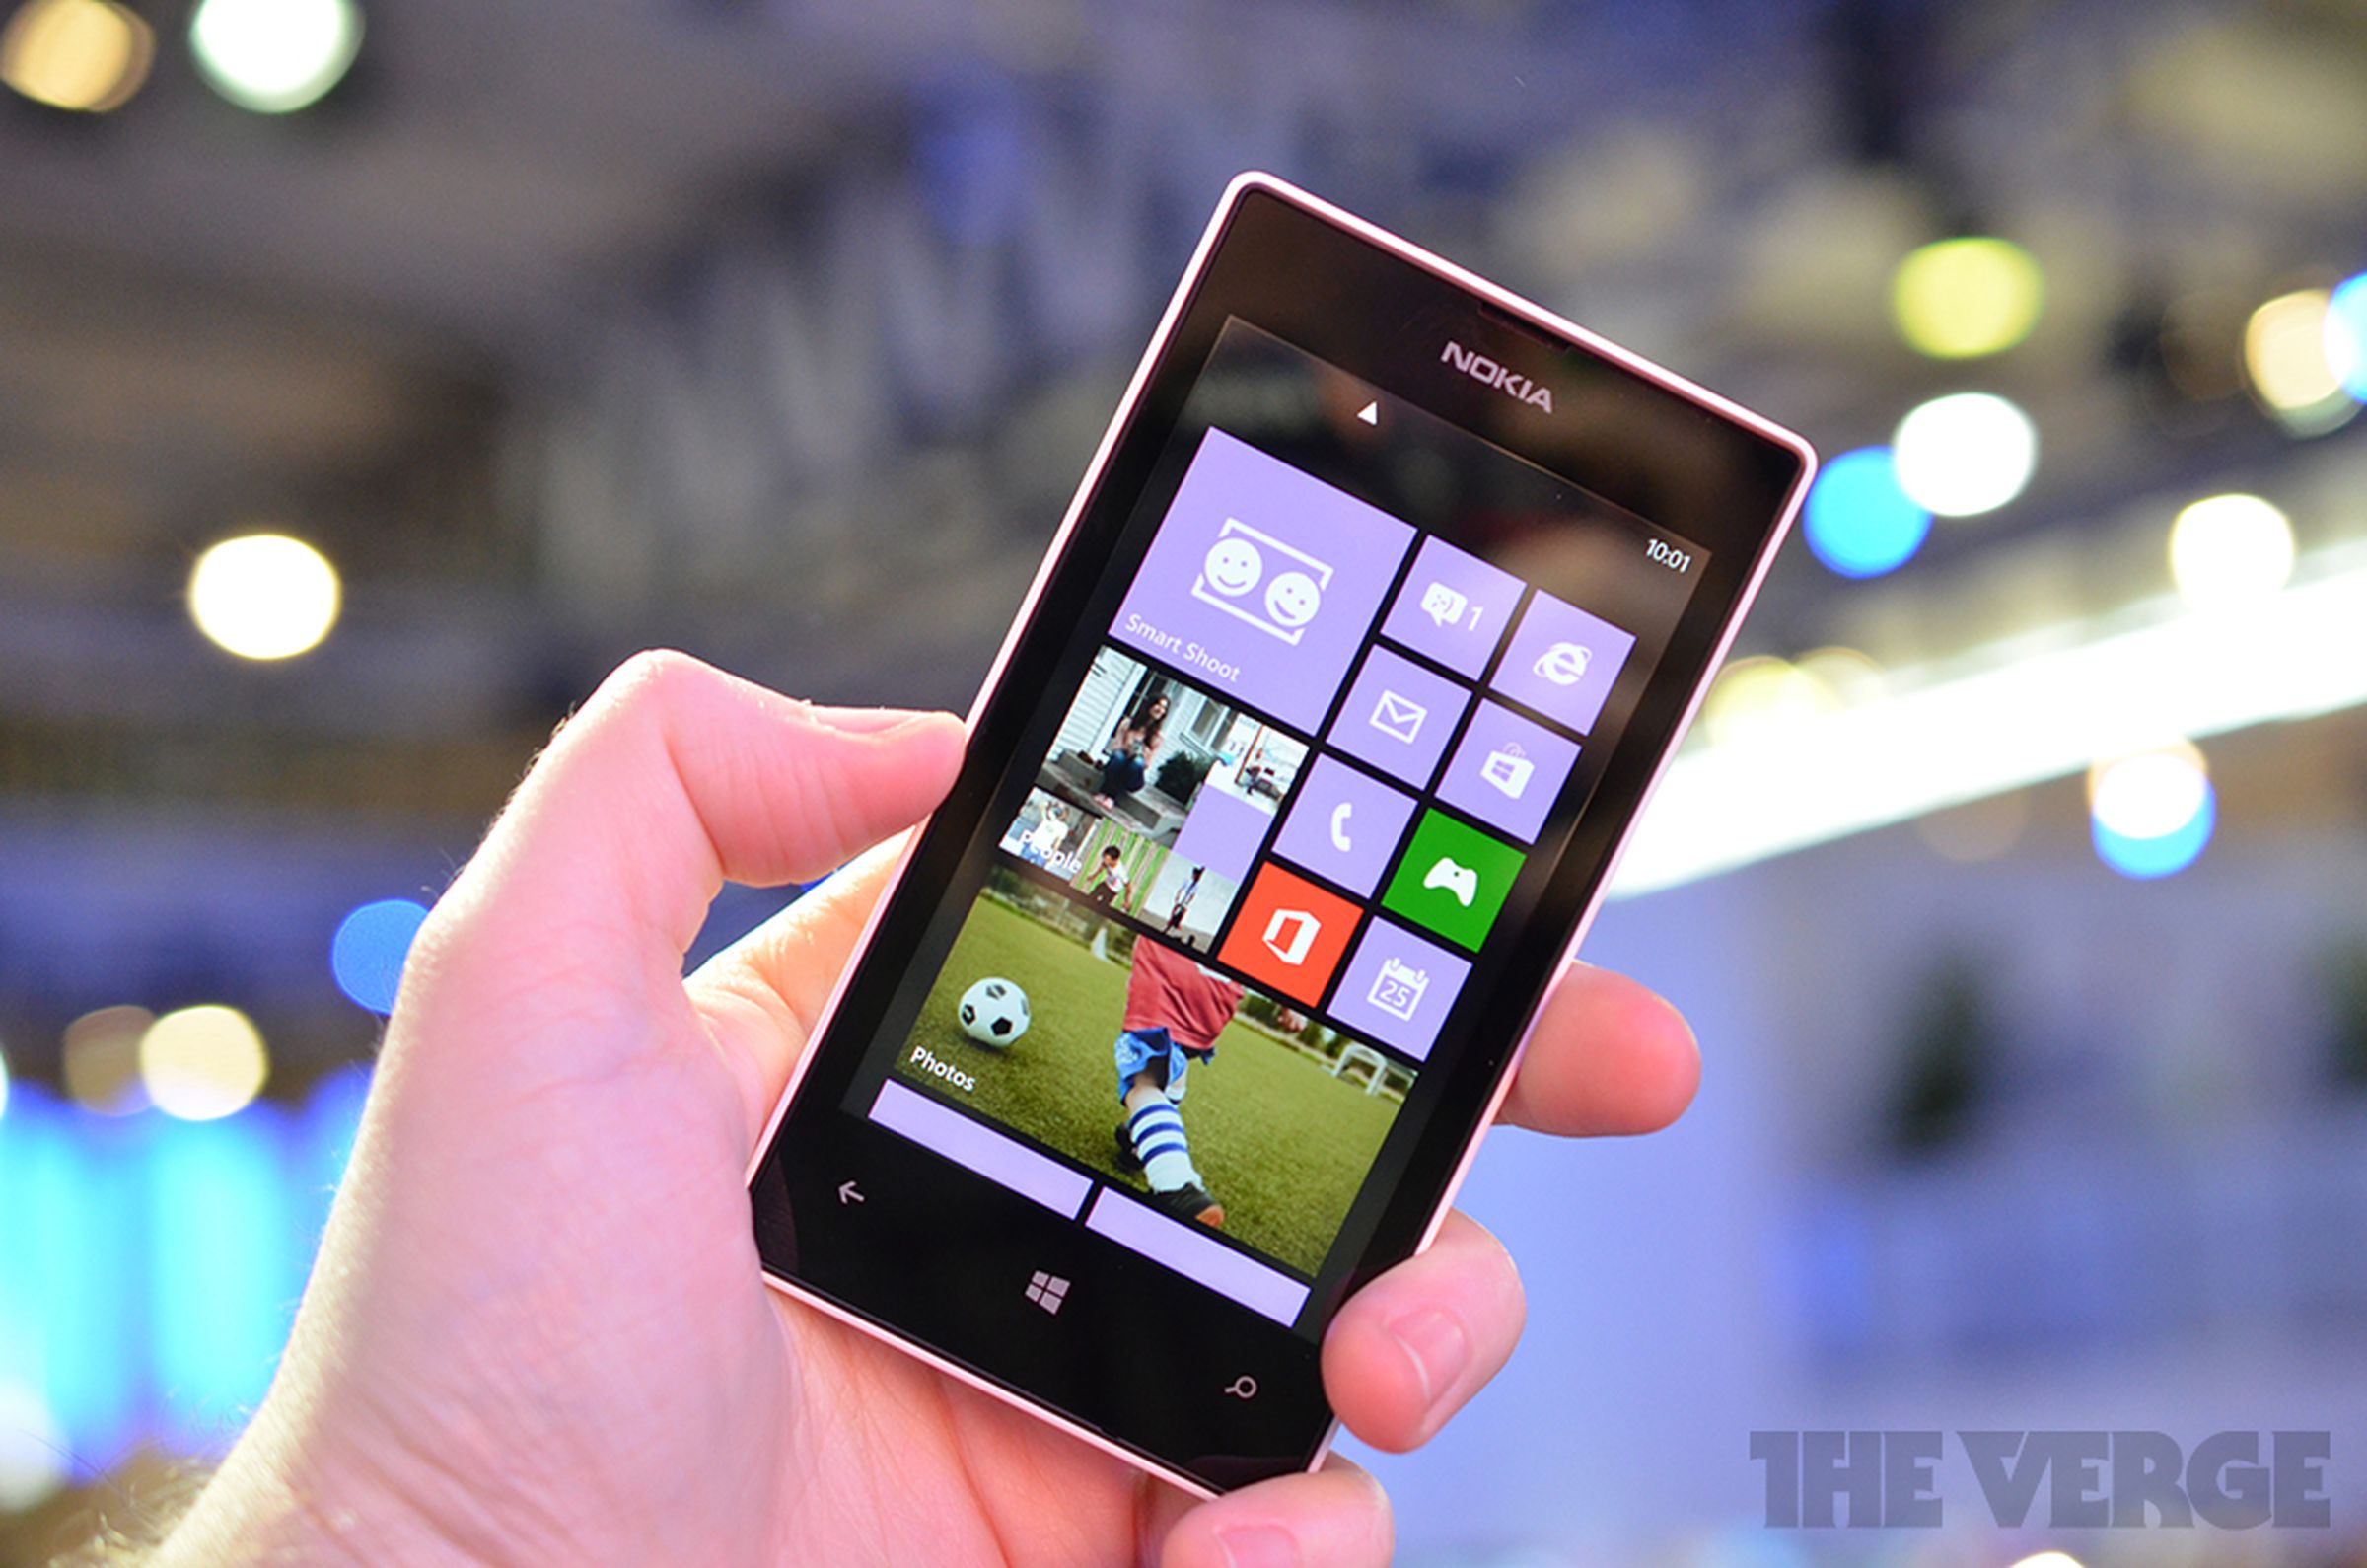 Nokia Lumia 520 hands-on photos